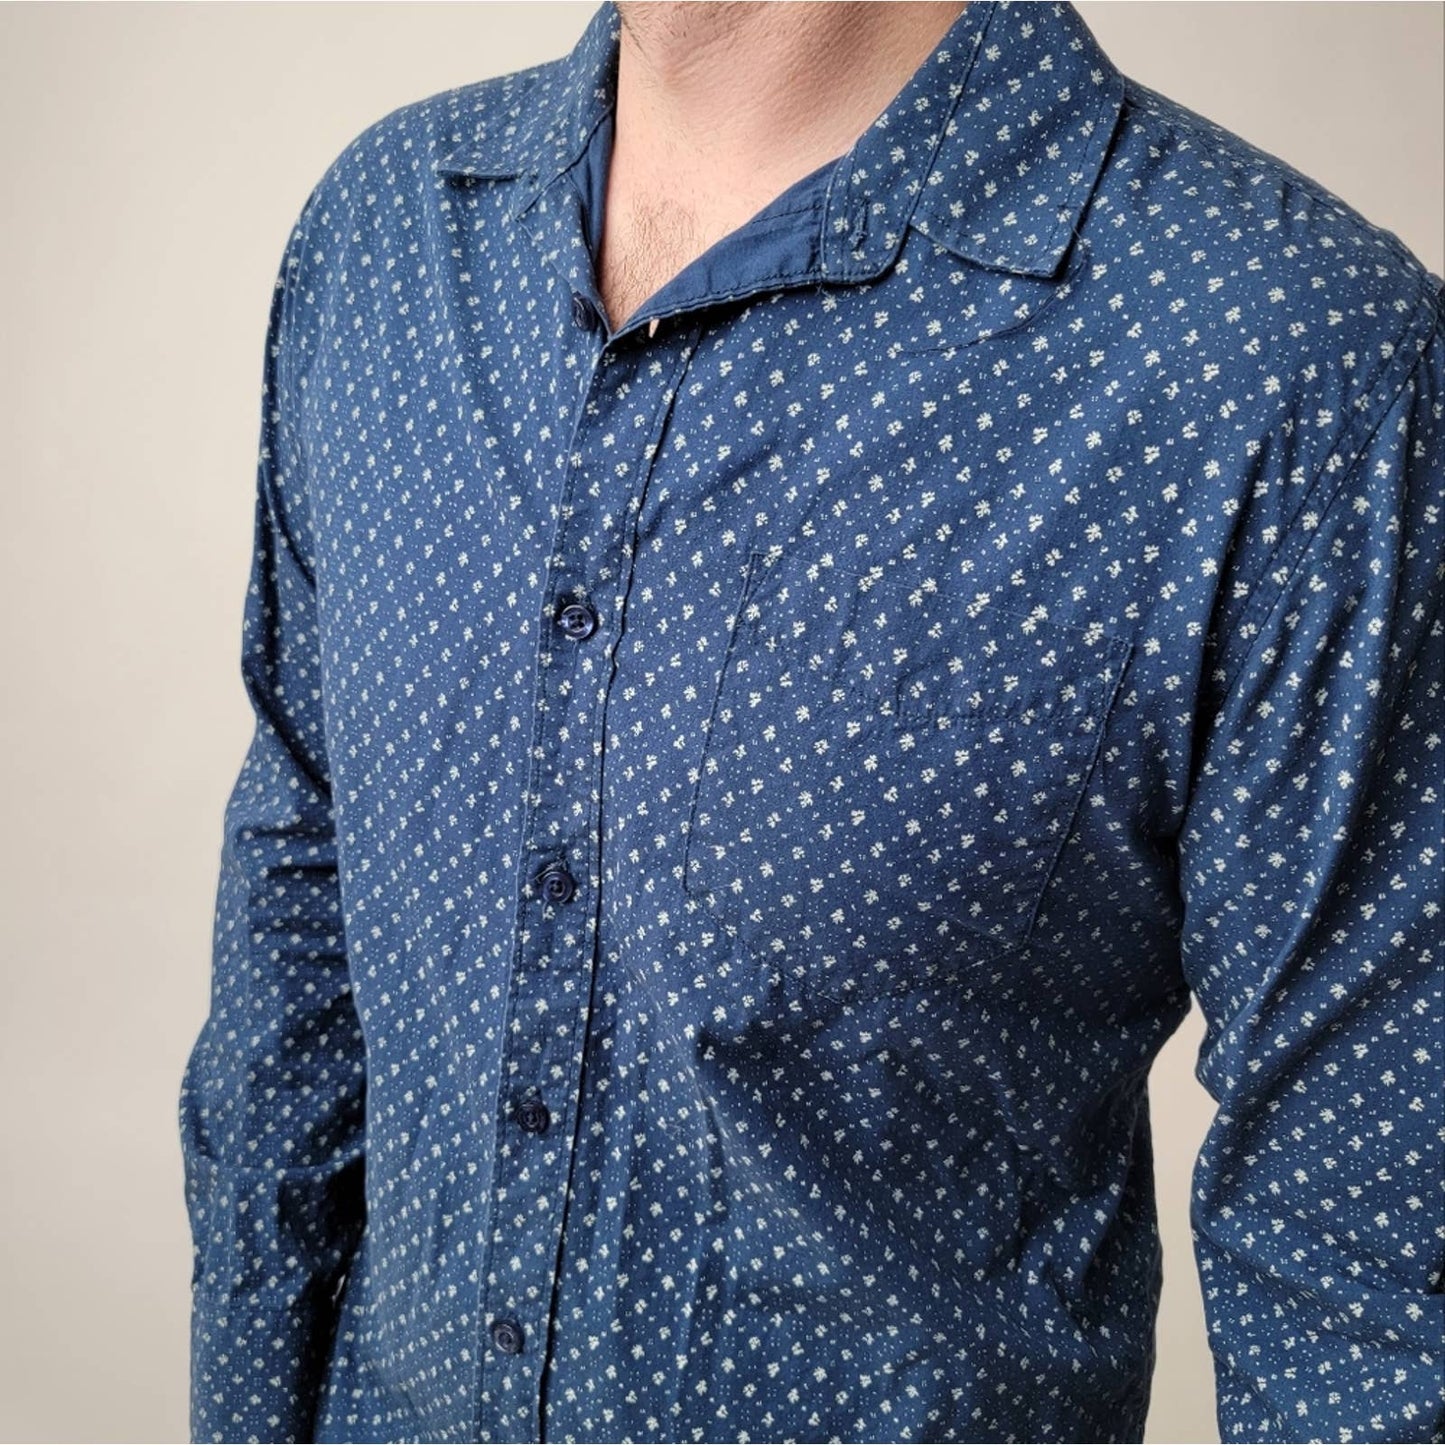 American Rag Paisley Print Slim Fitted Cut Button Down Shirt - M